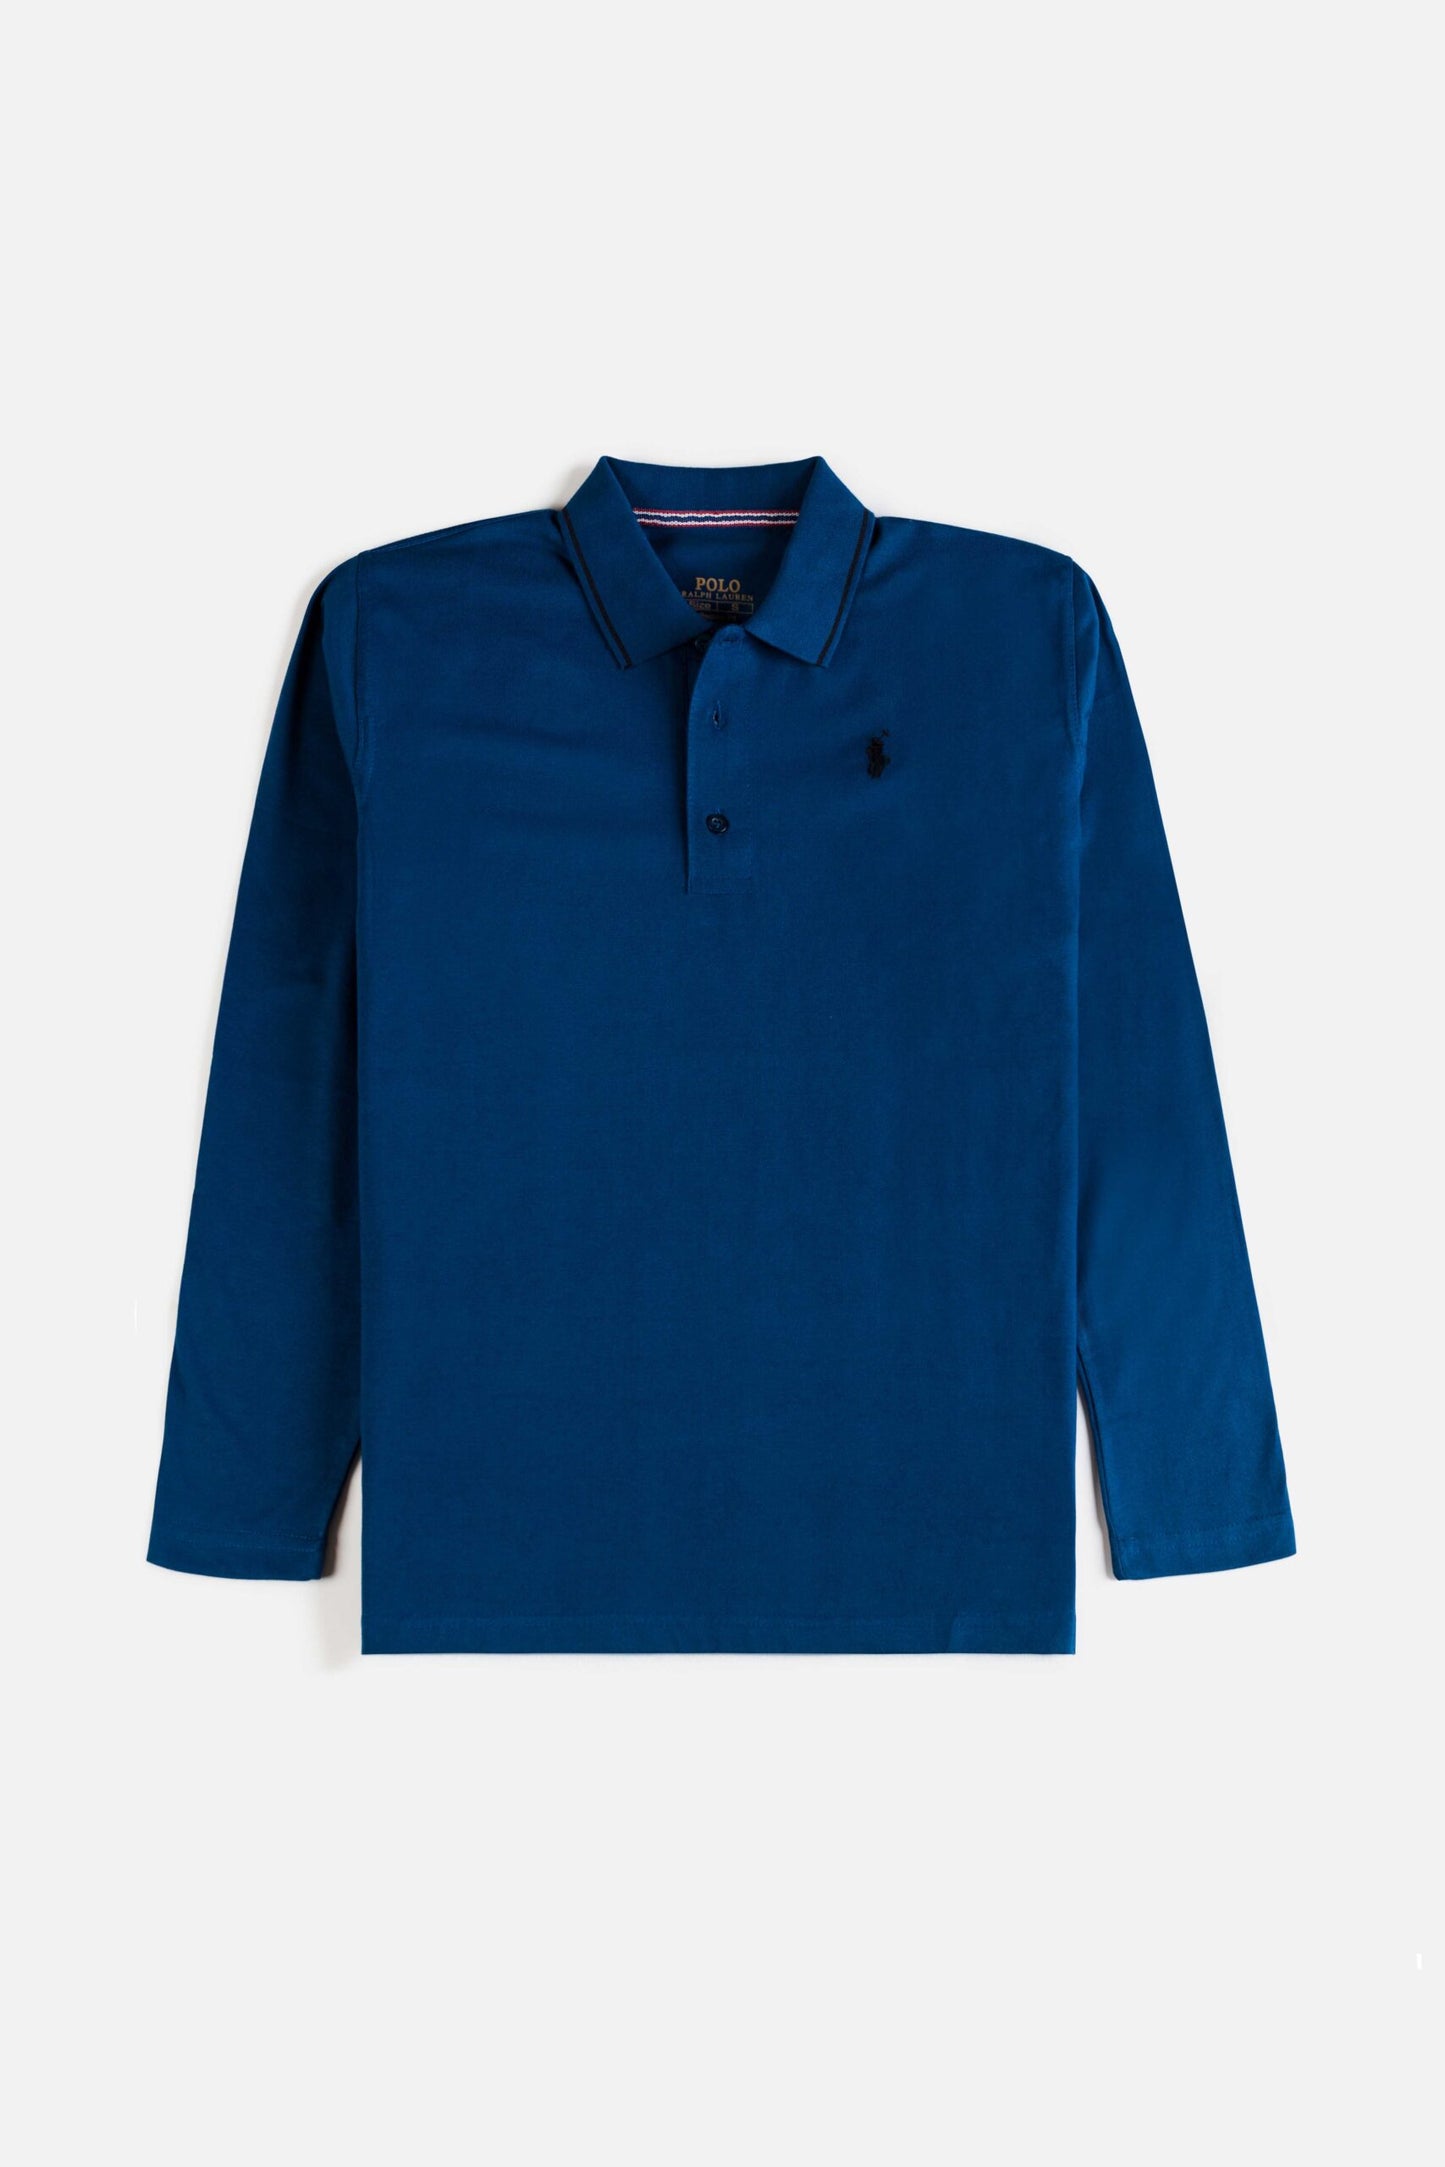 RL Premium Cotton Full Polo -Aqua Blue